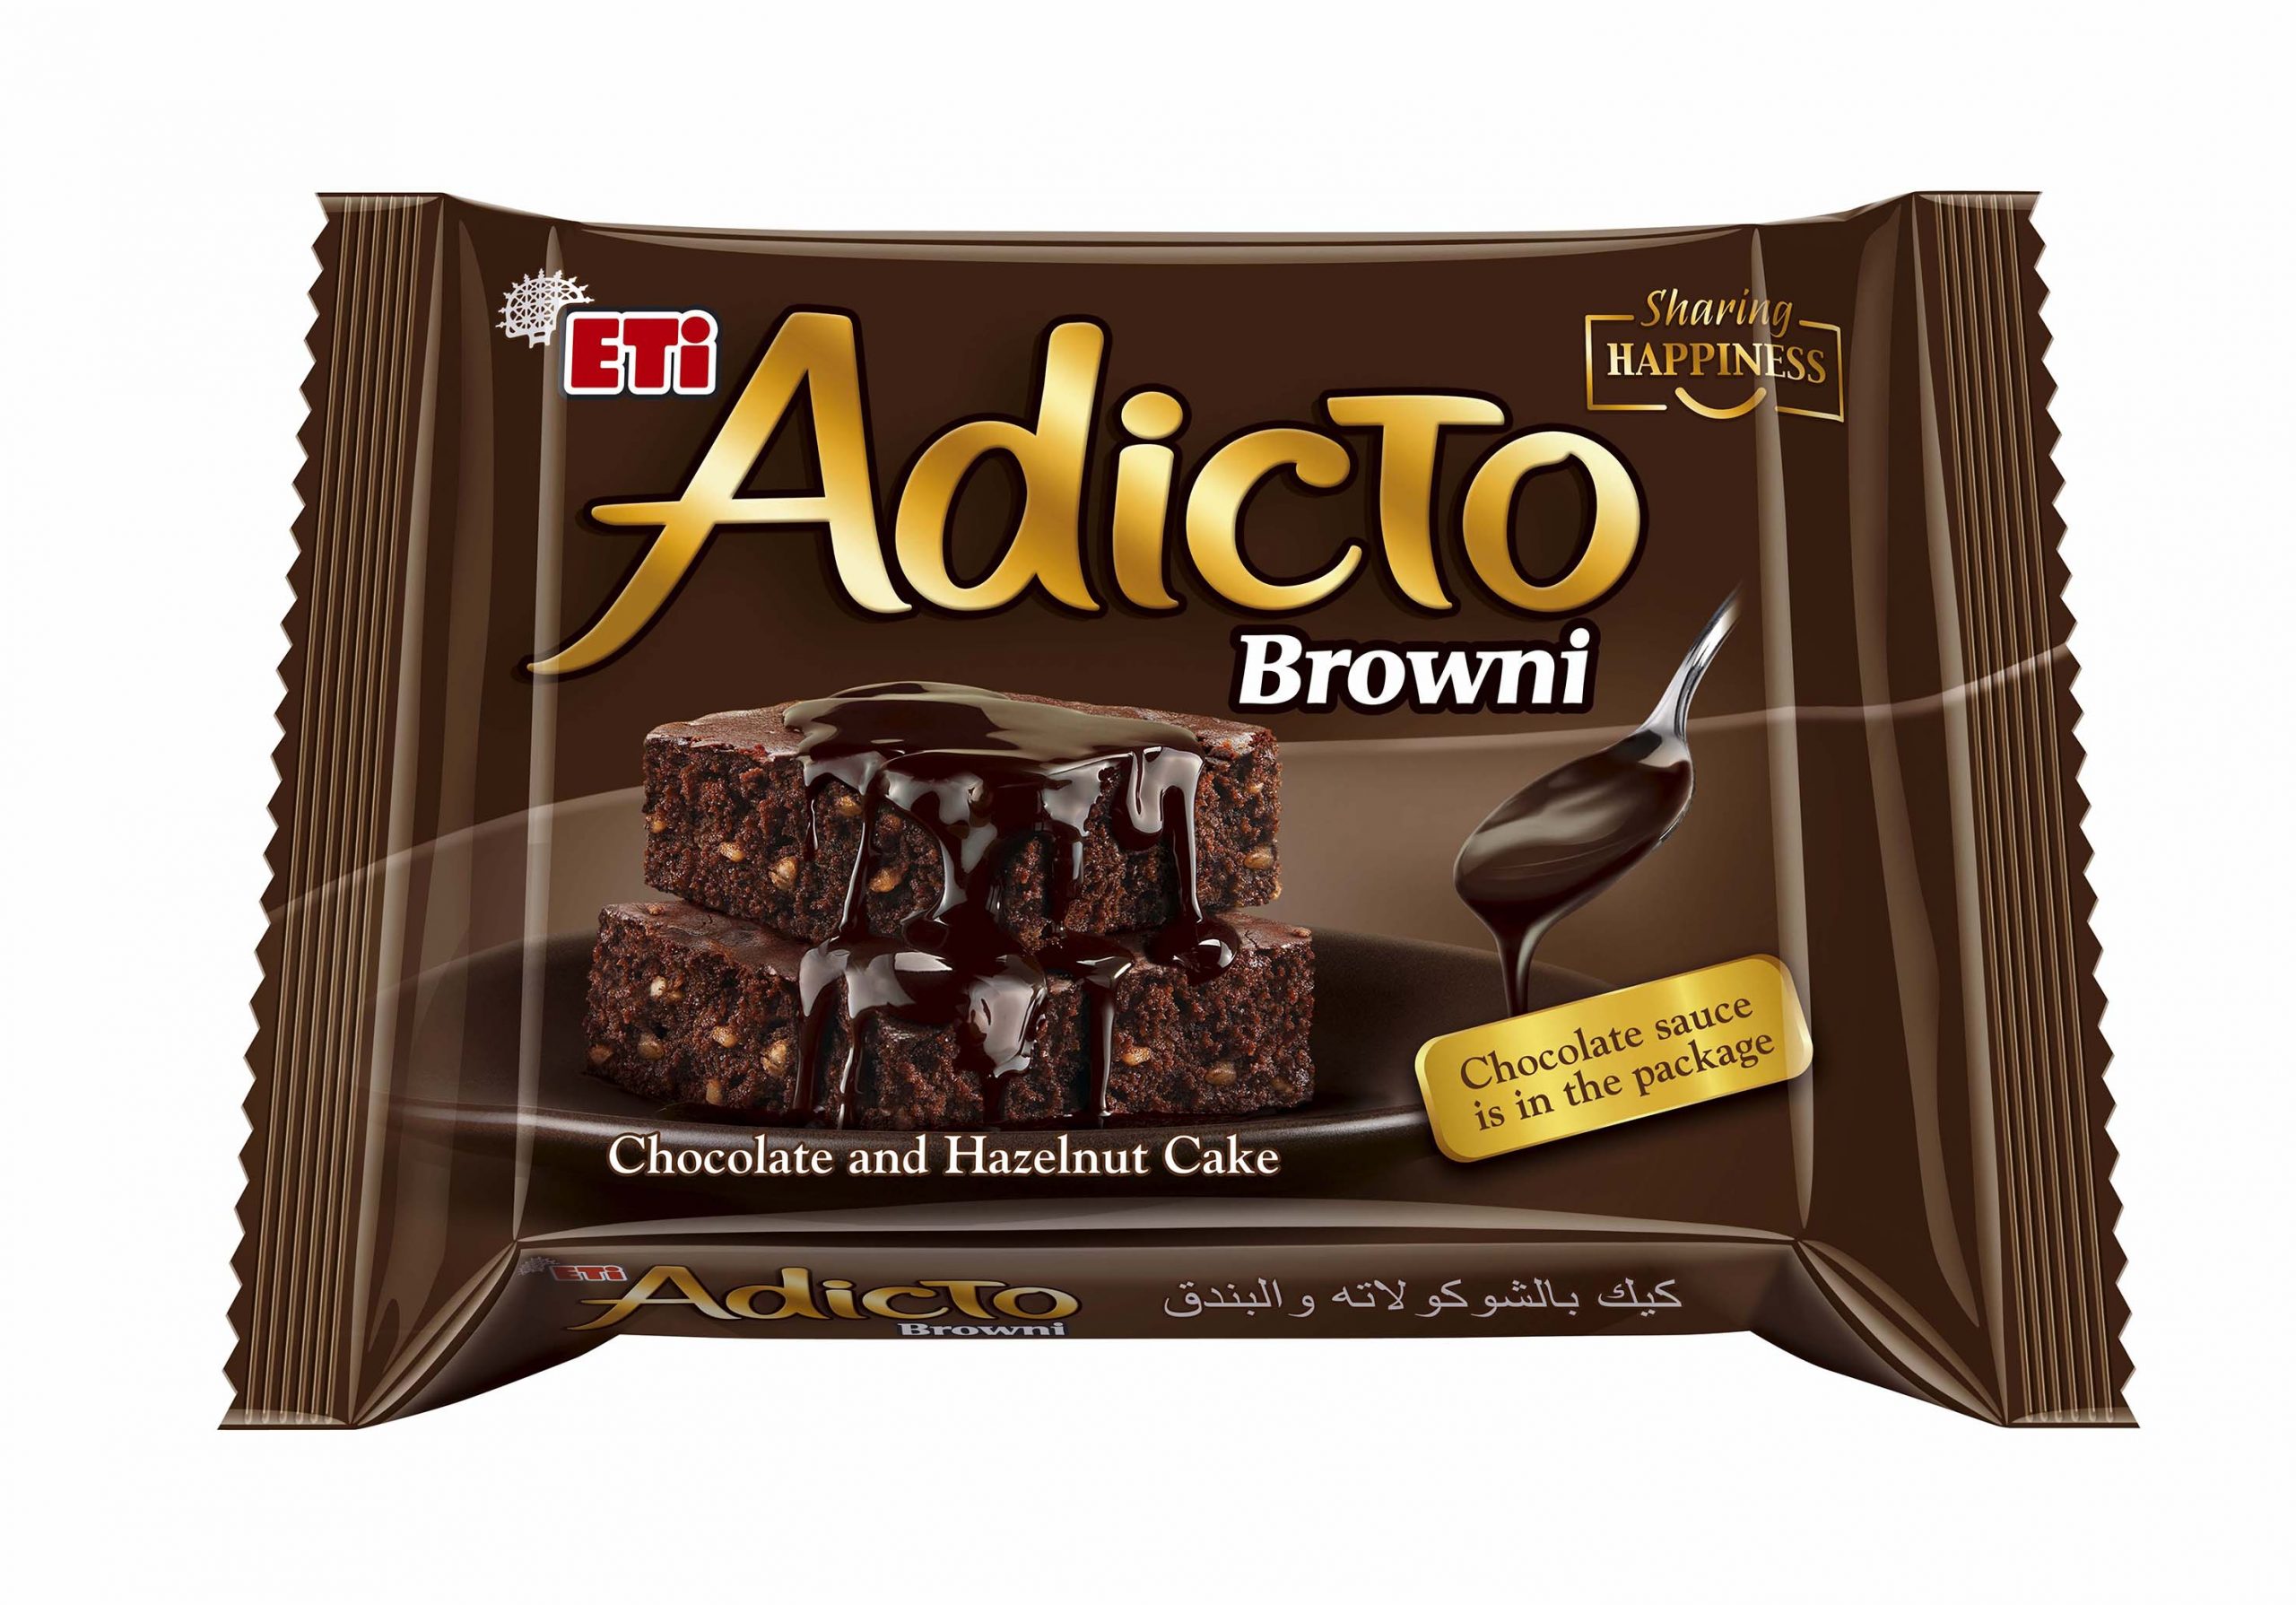 ETI ADICTO BROWNI 200 GR (brownie au chocolat avec coulis de chocolat)